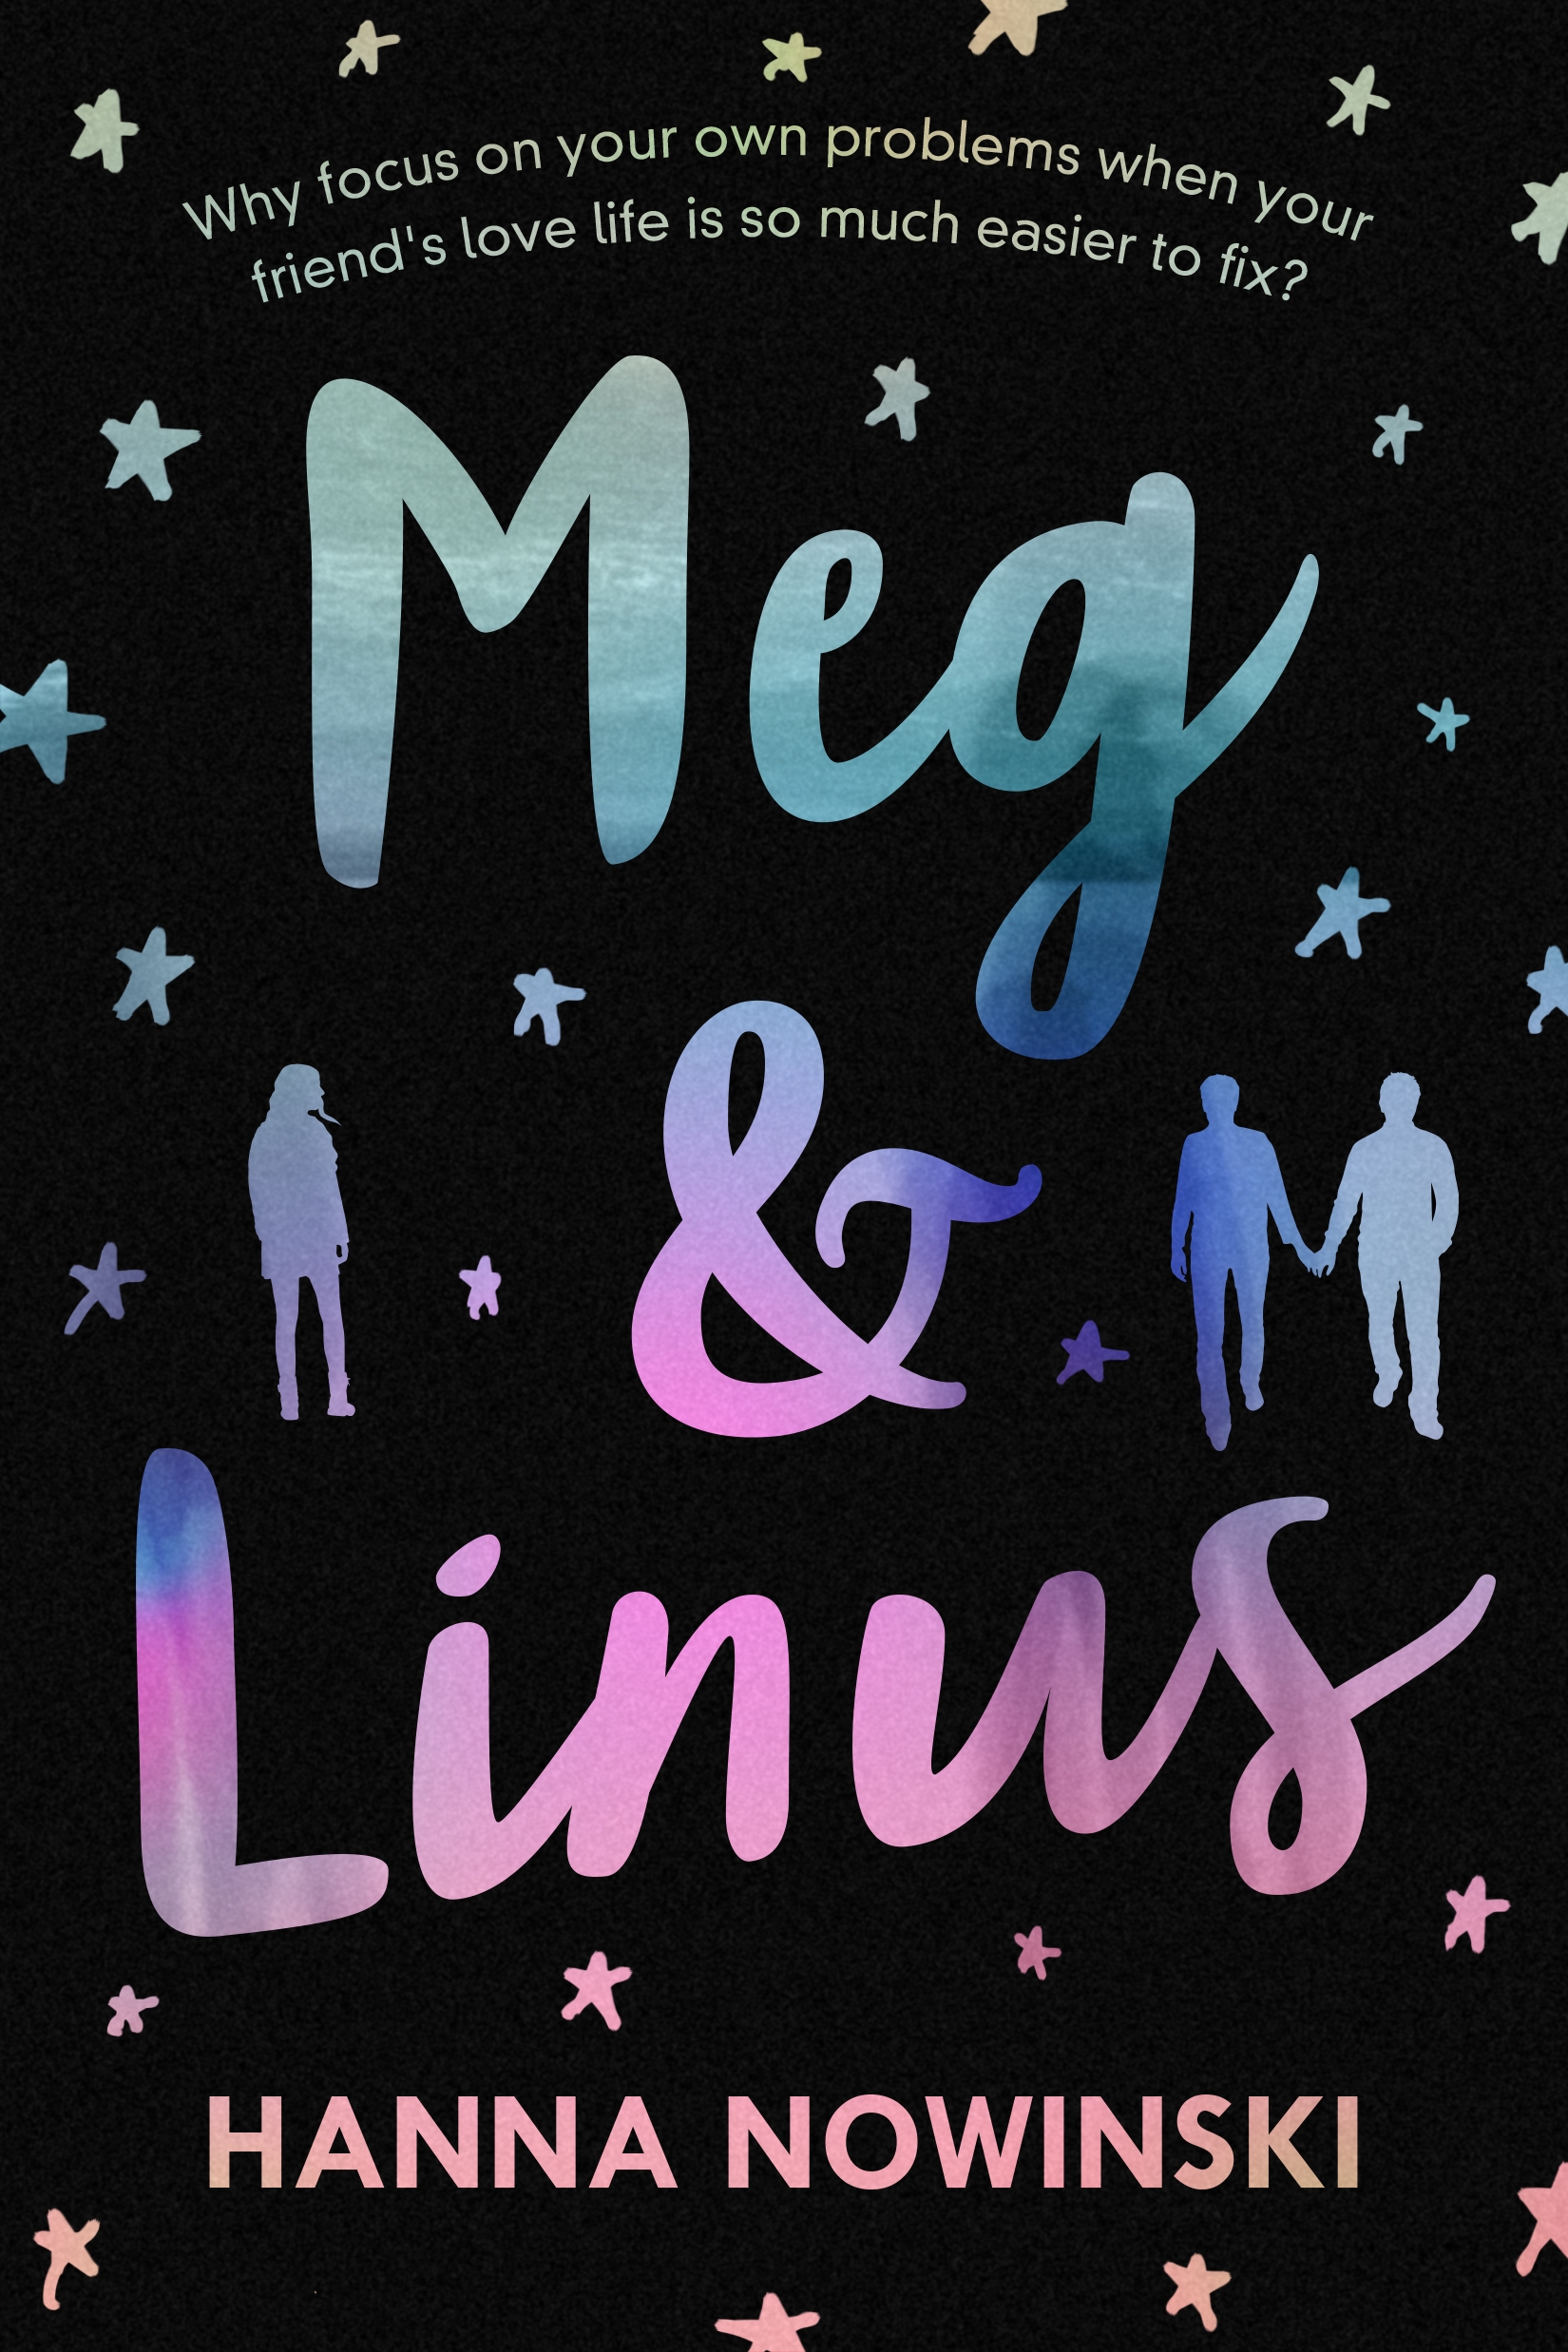 Images for Meg & Linus